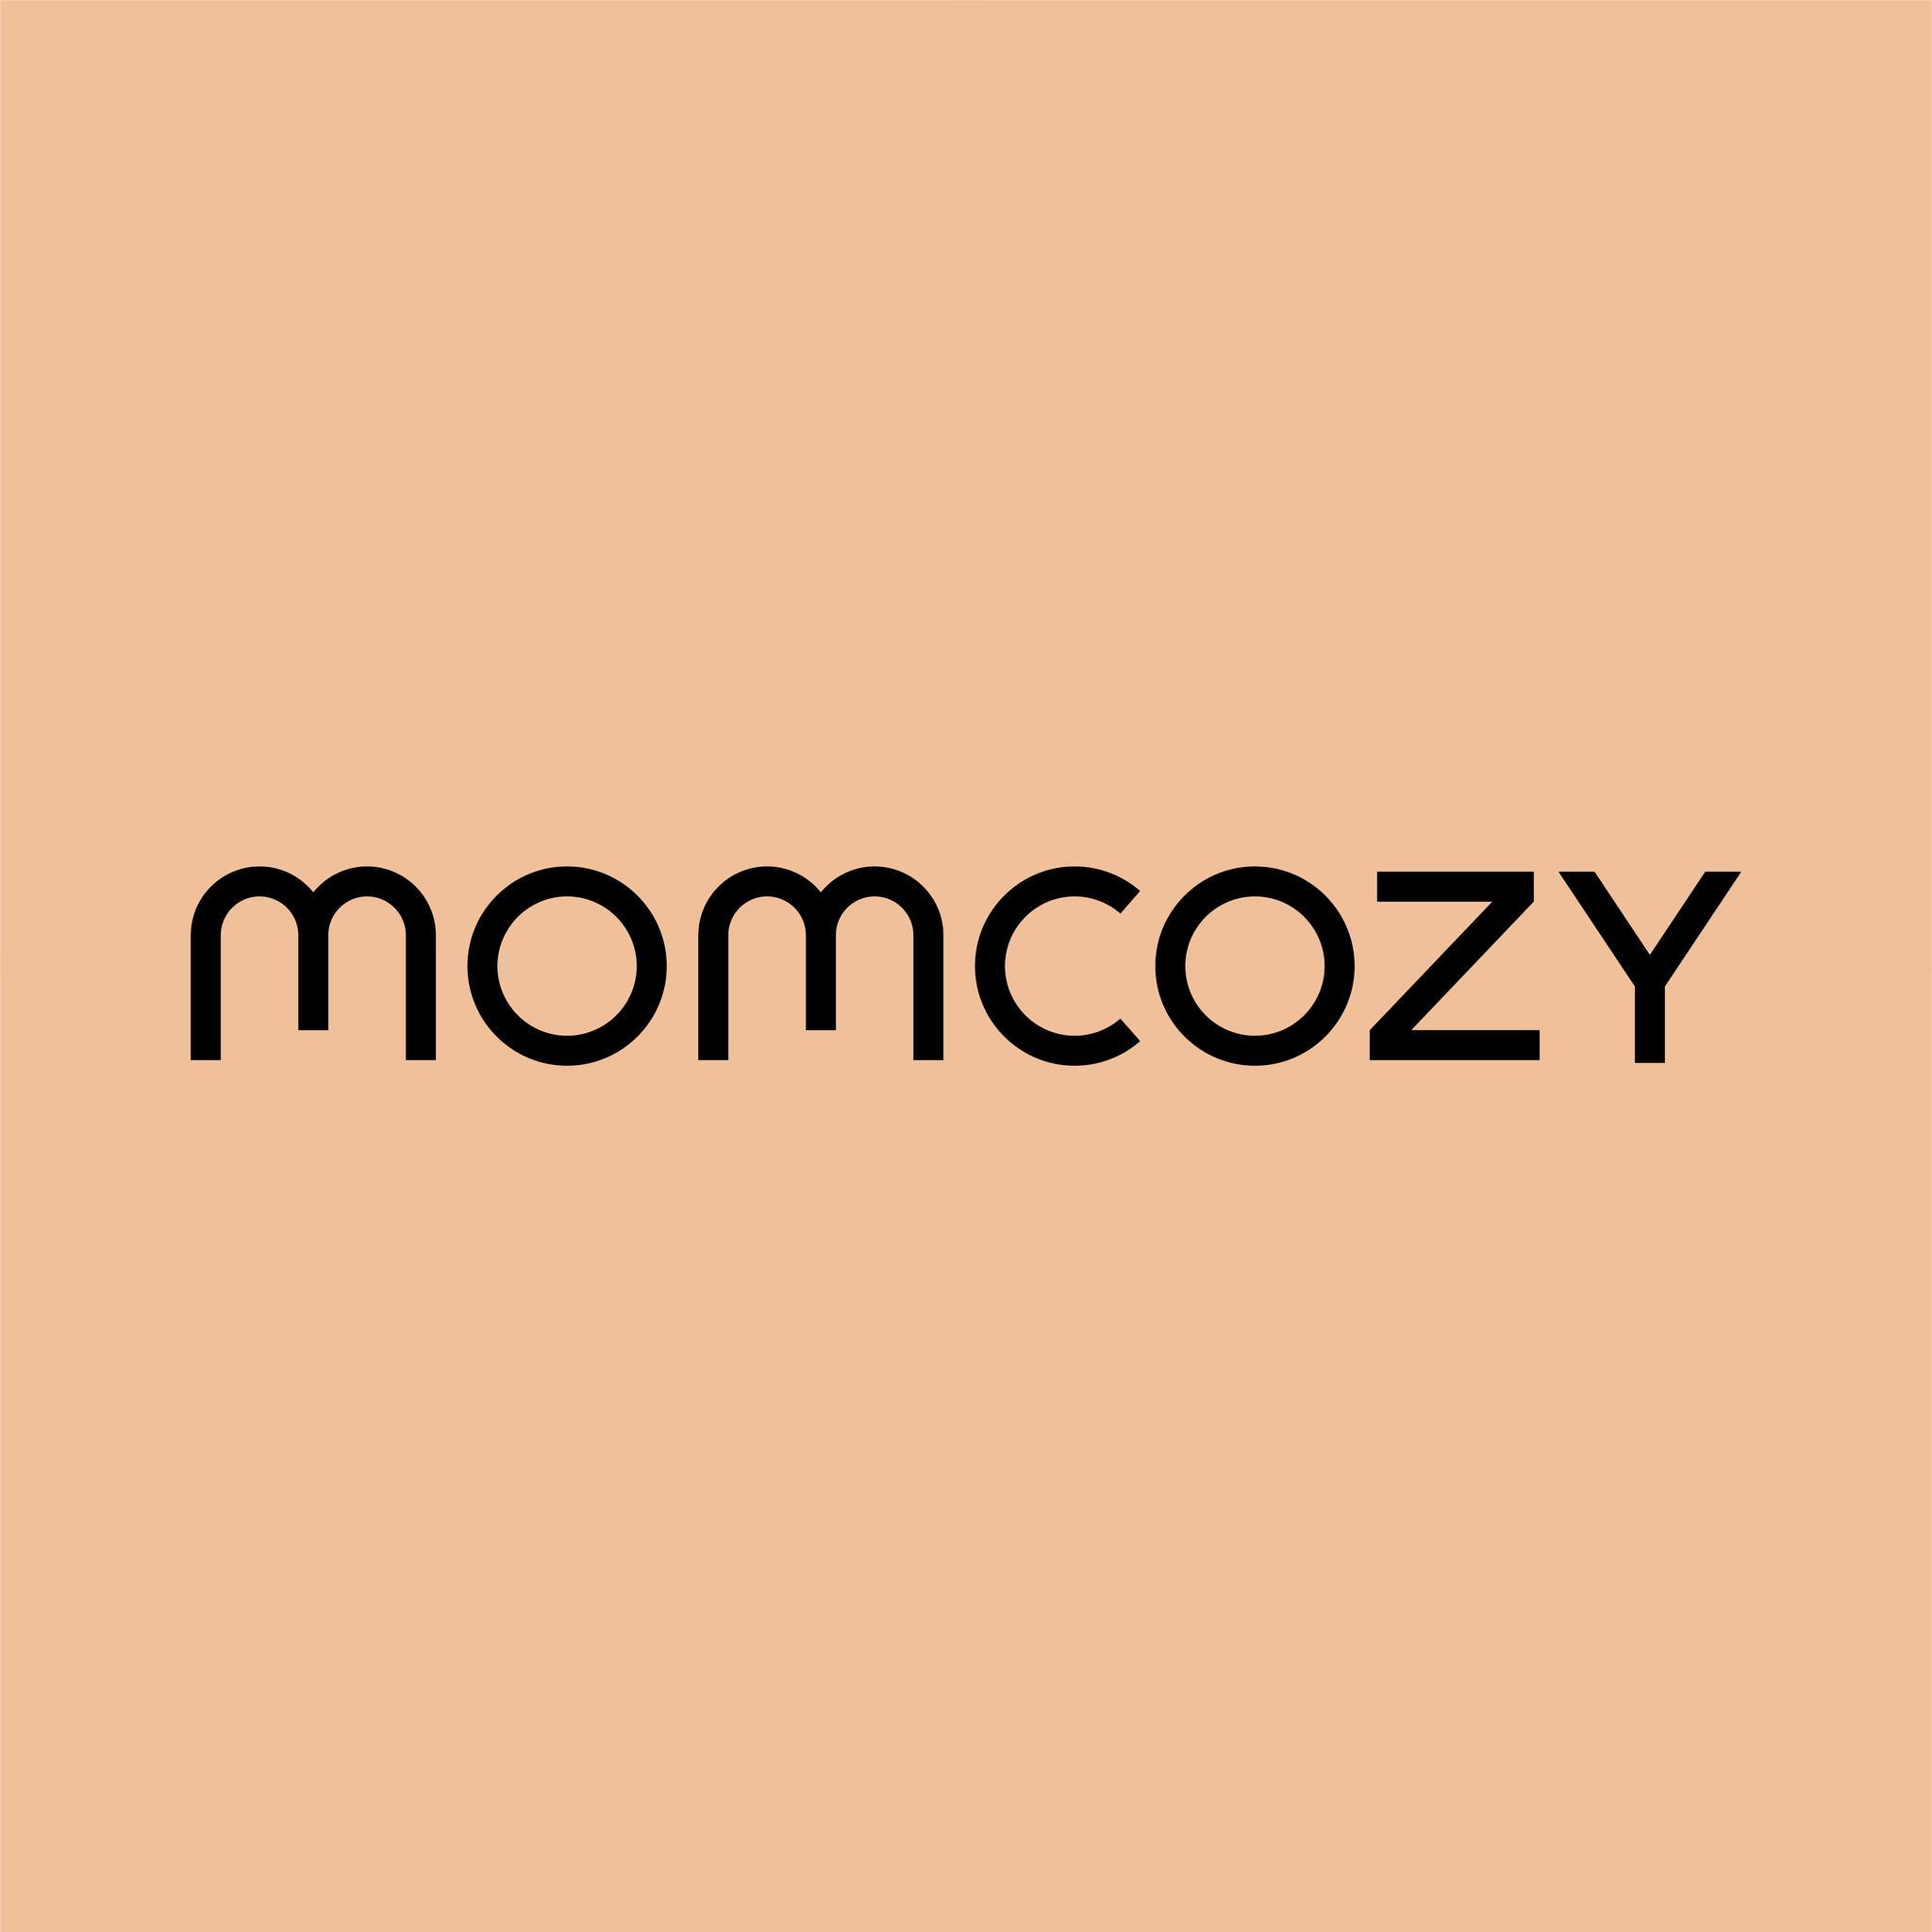 Momcozy Nursing Bras Coupon Codes